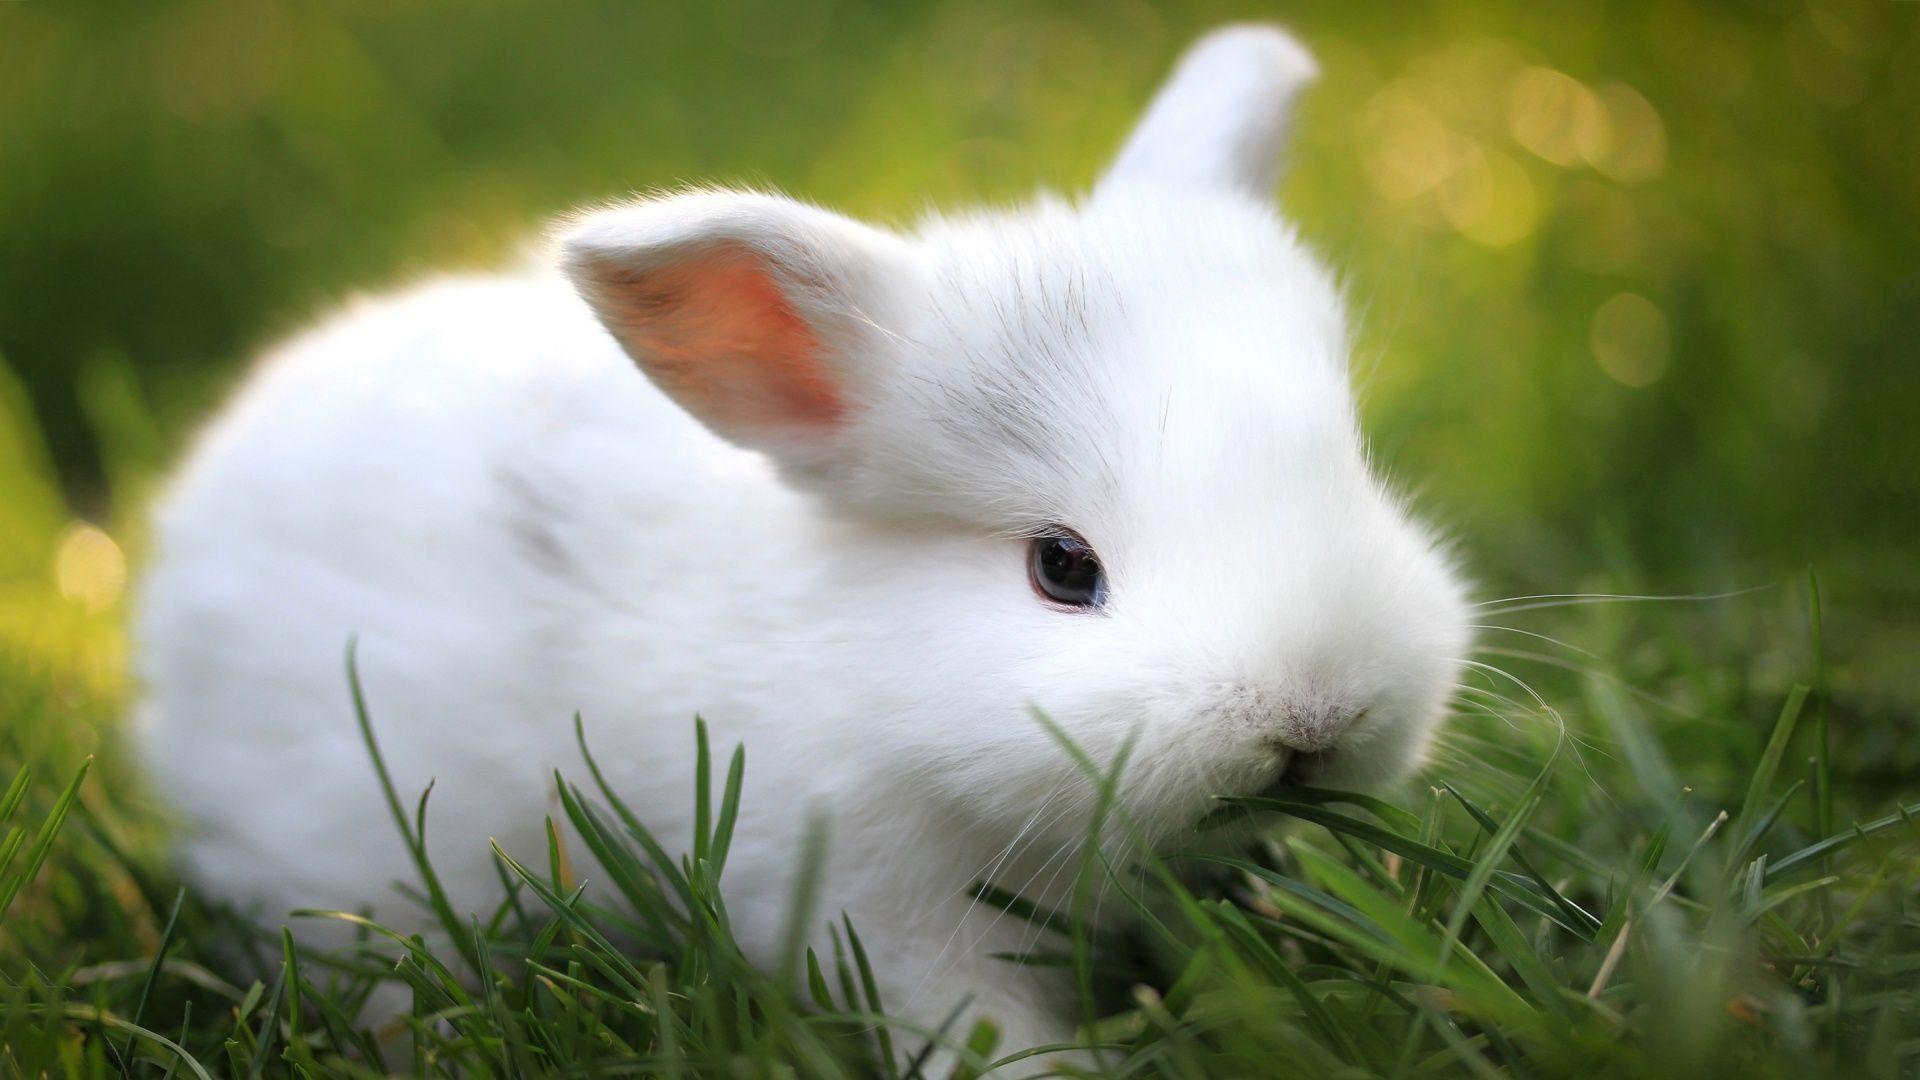 cute anime bunnies. Cute White Bunny. Full HD Desktop Wallpaper 1080p I WANT ONE SSSSSSSOOOOOOOSSSSOOOOOSSSOOOOOOOO. Cute baby bunnies, Cute animals, Cool pets